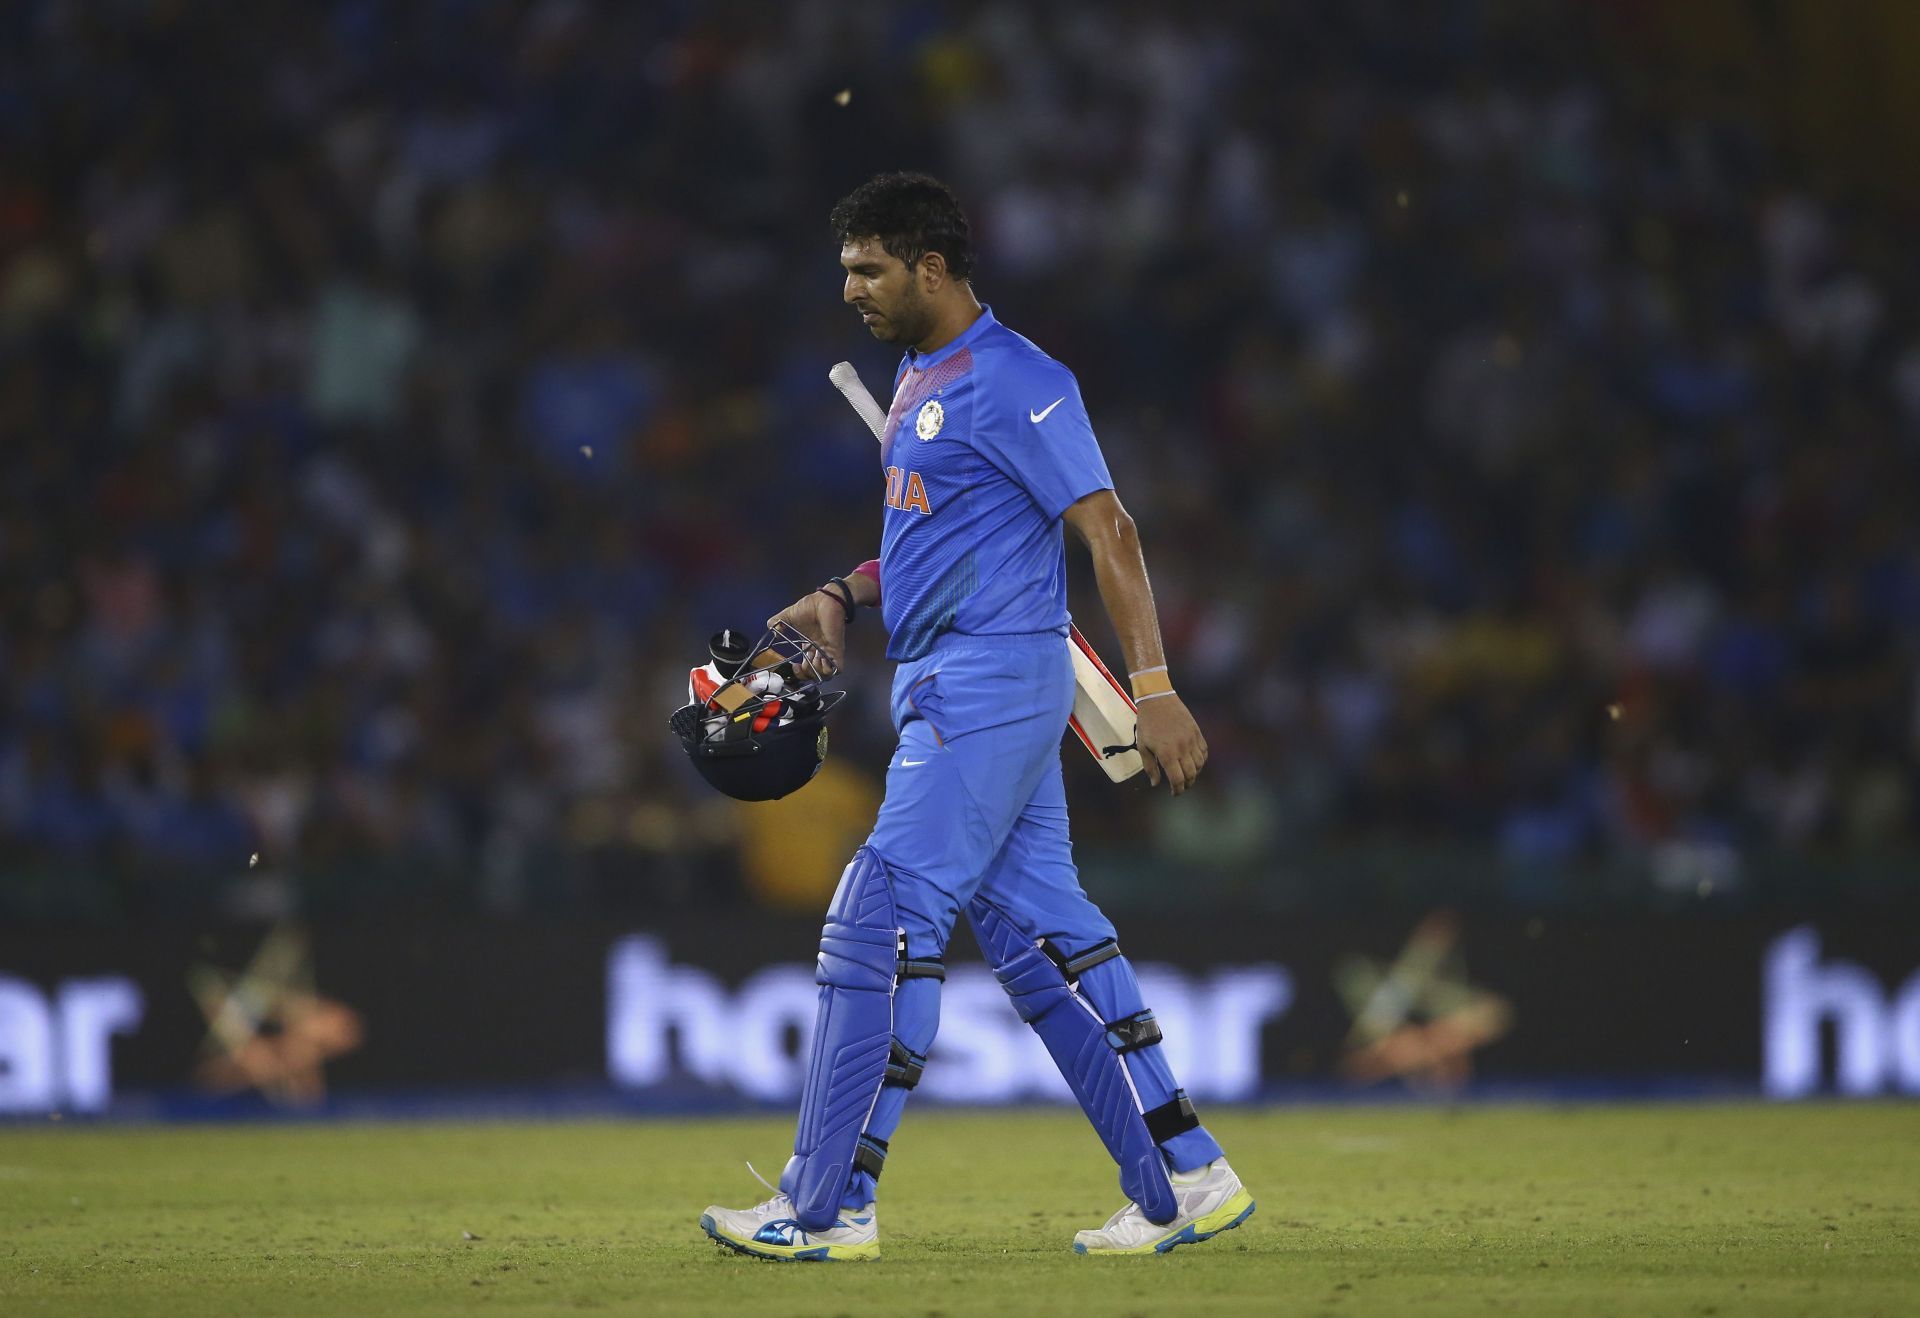 Yuvraj Singh played his last T20 World Cup match against Australia